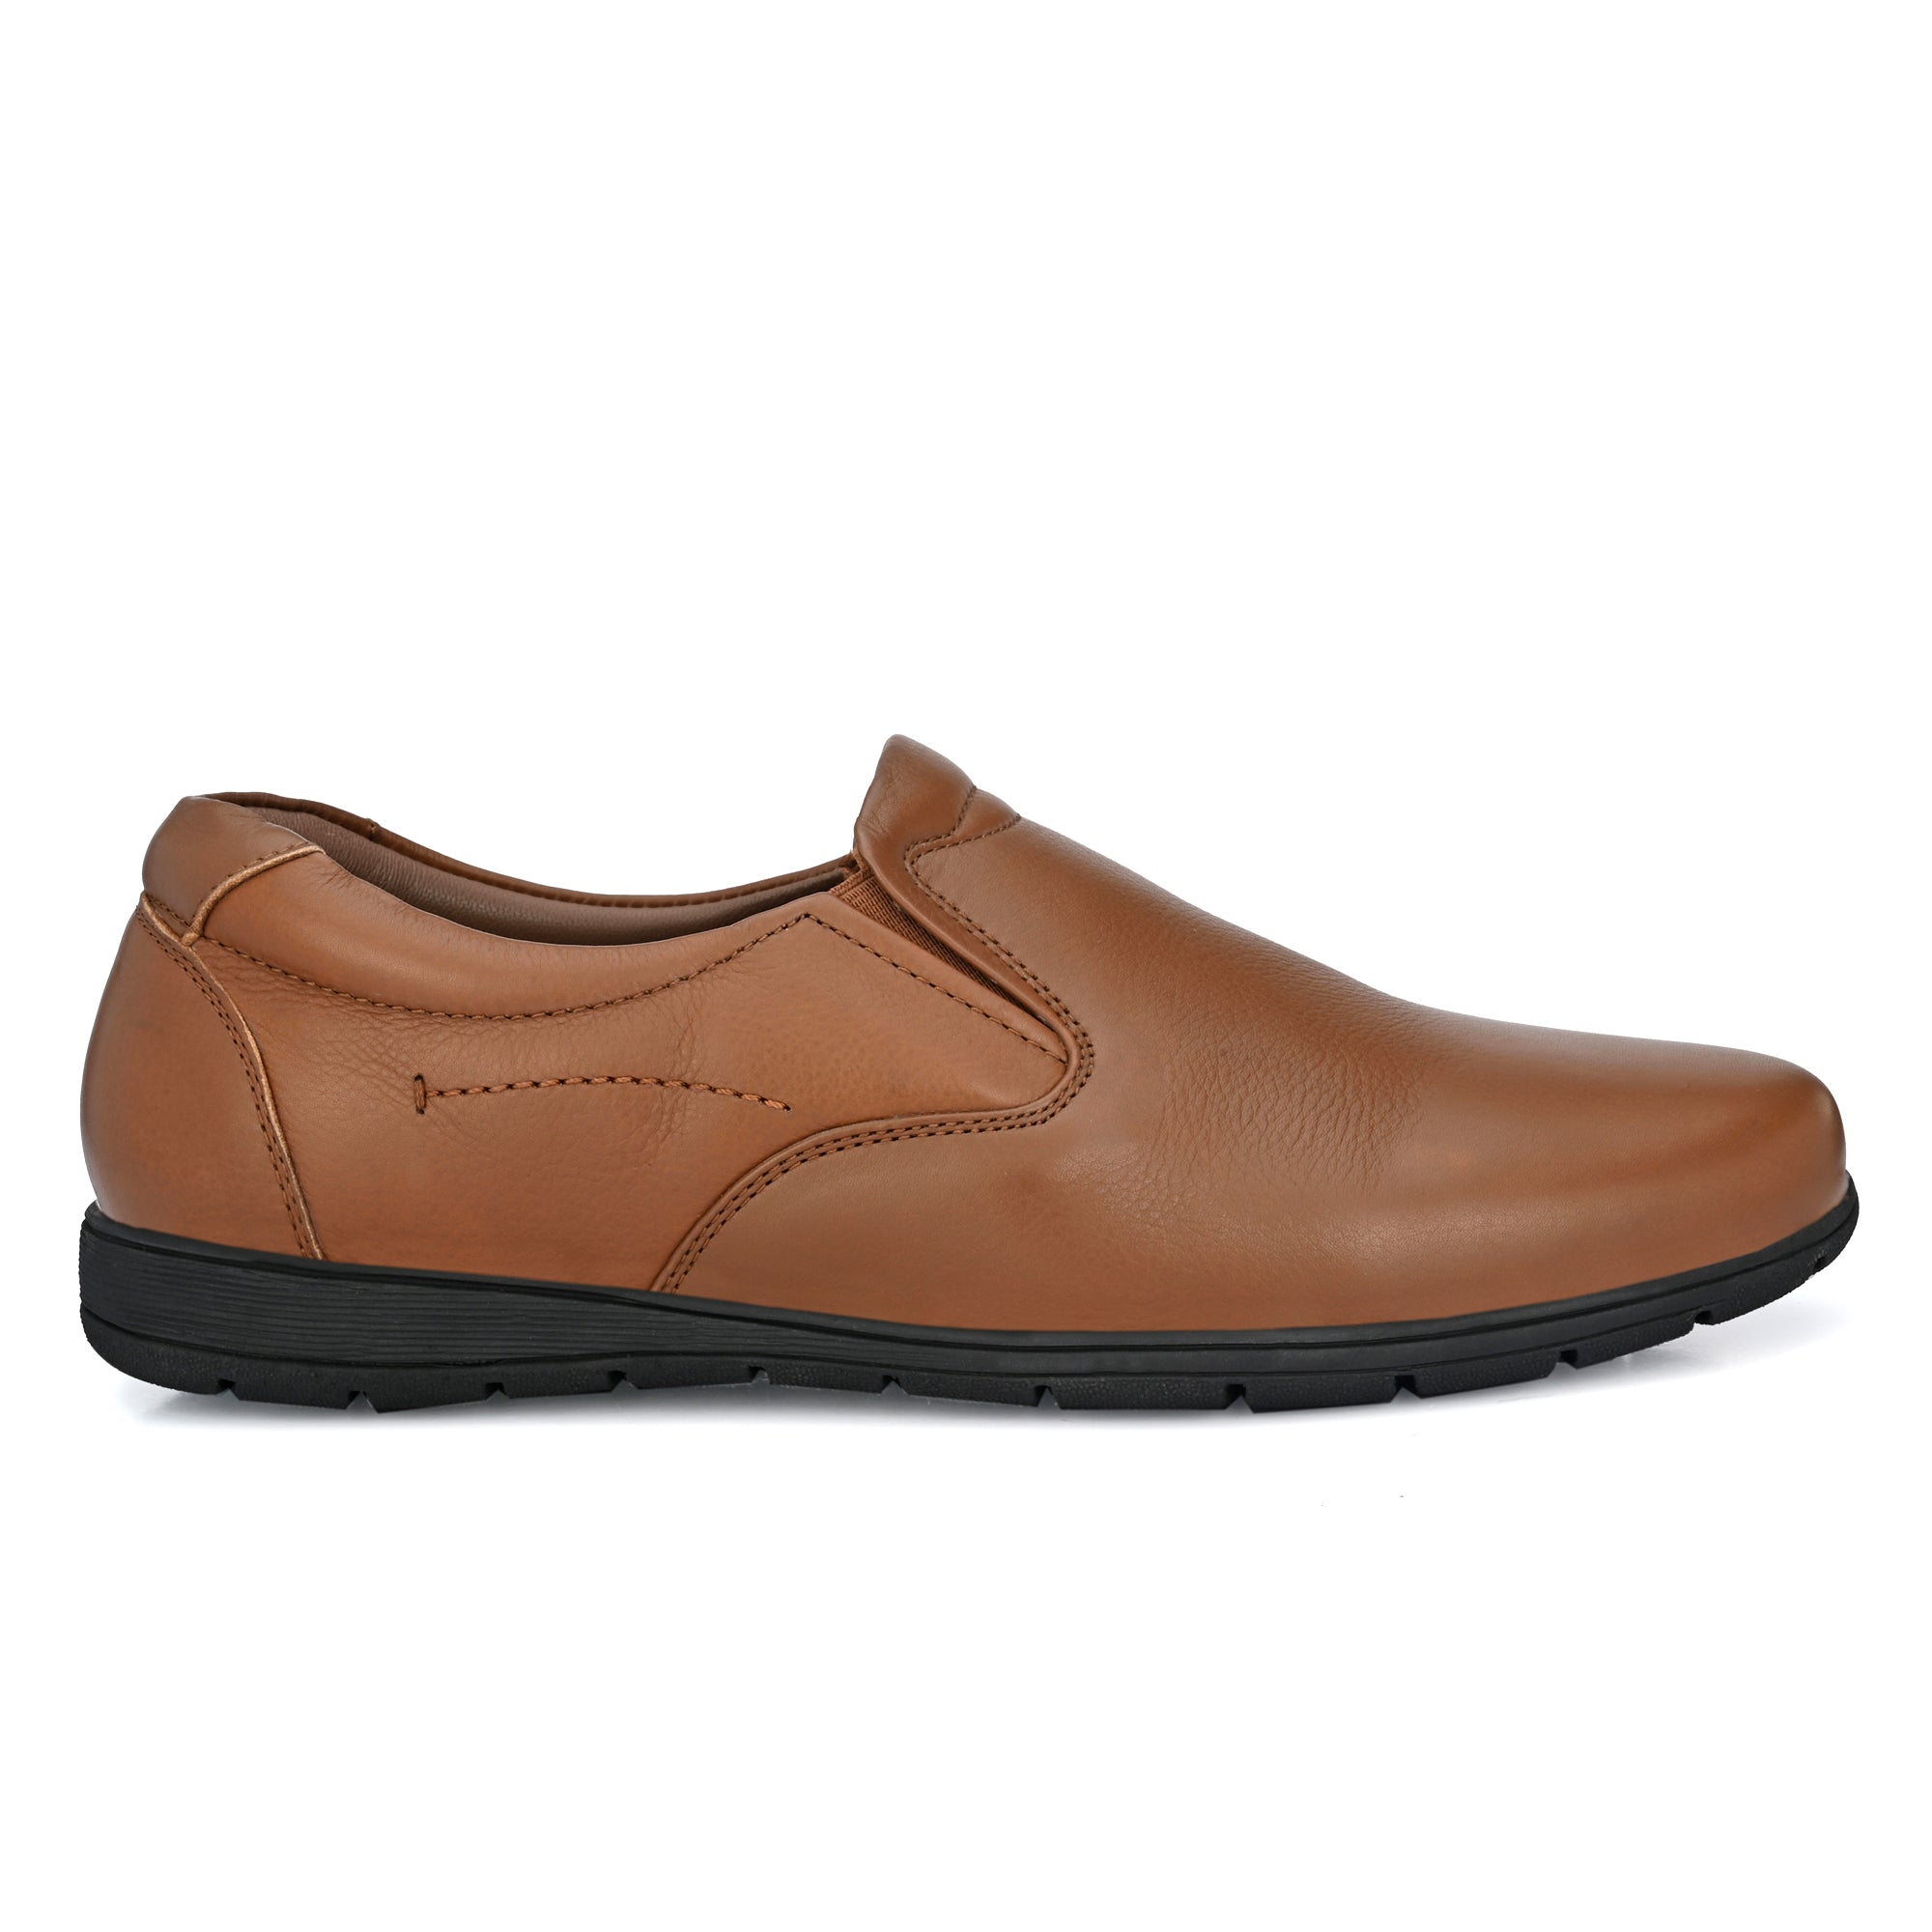 Egoss Comfortable Leather Slip On Shoes For Men